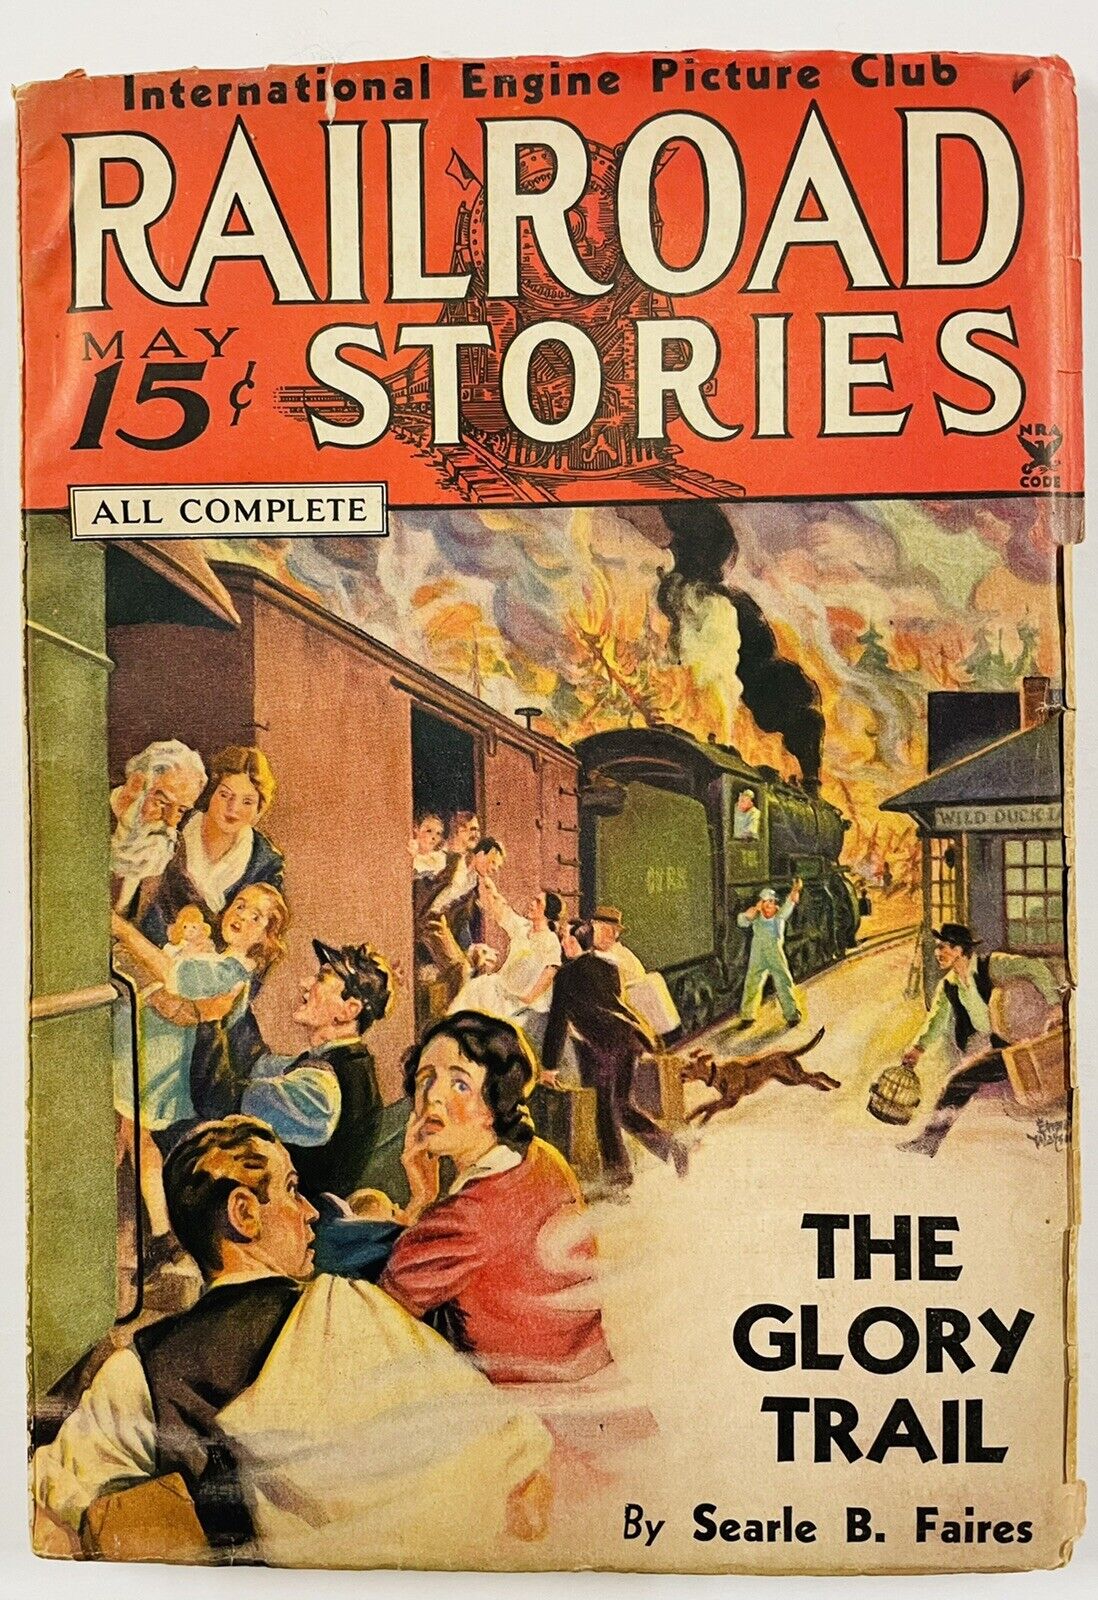 Railroad Stories Magazine, May 1935